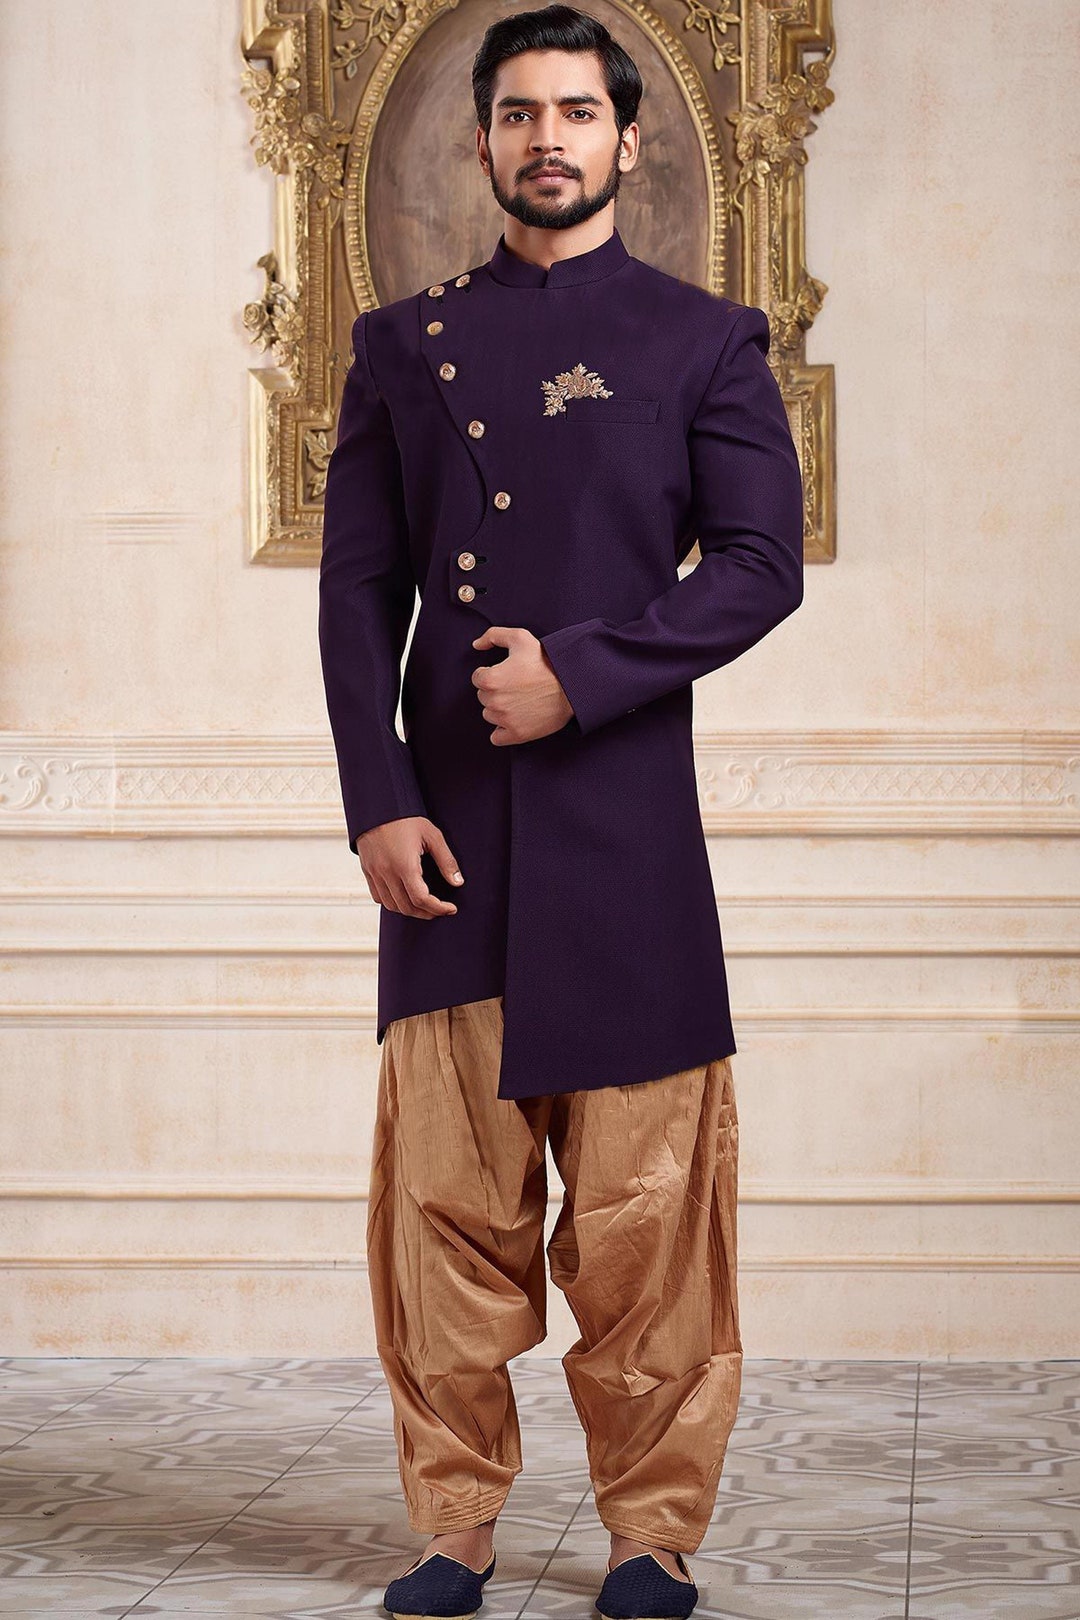 Jodhpuri Suit, Indo Western, Coat, Formal Suit, Party Wear, Ethnic Wear,  Wedding Suit, Blazer, Men's Sherwani, Customised, Jacket. Tuxedo - Etsy